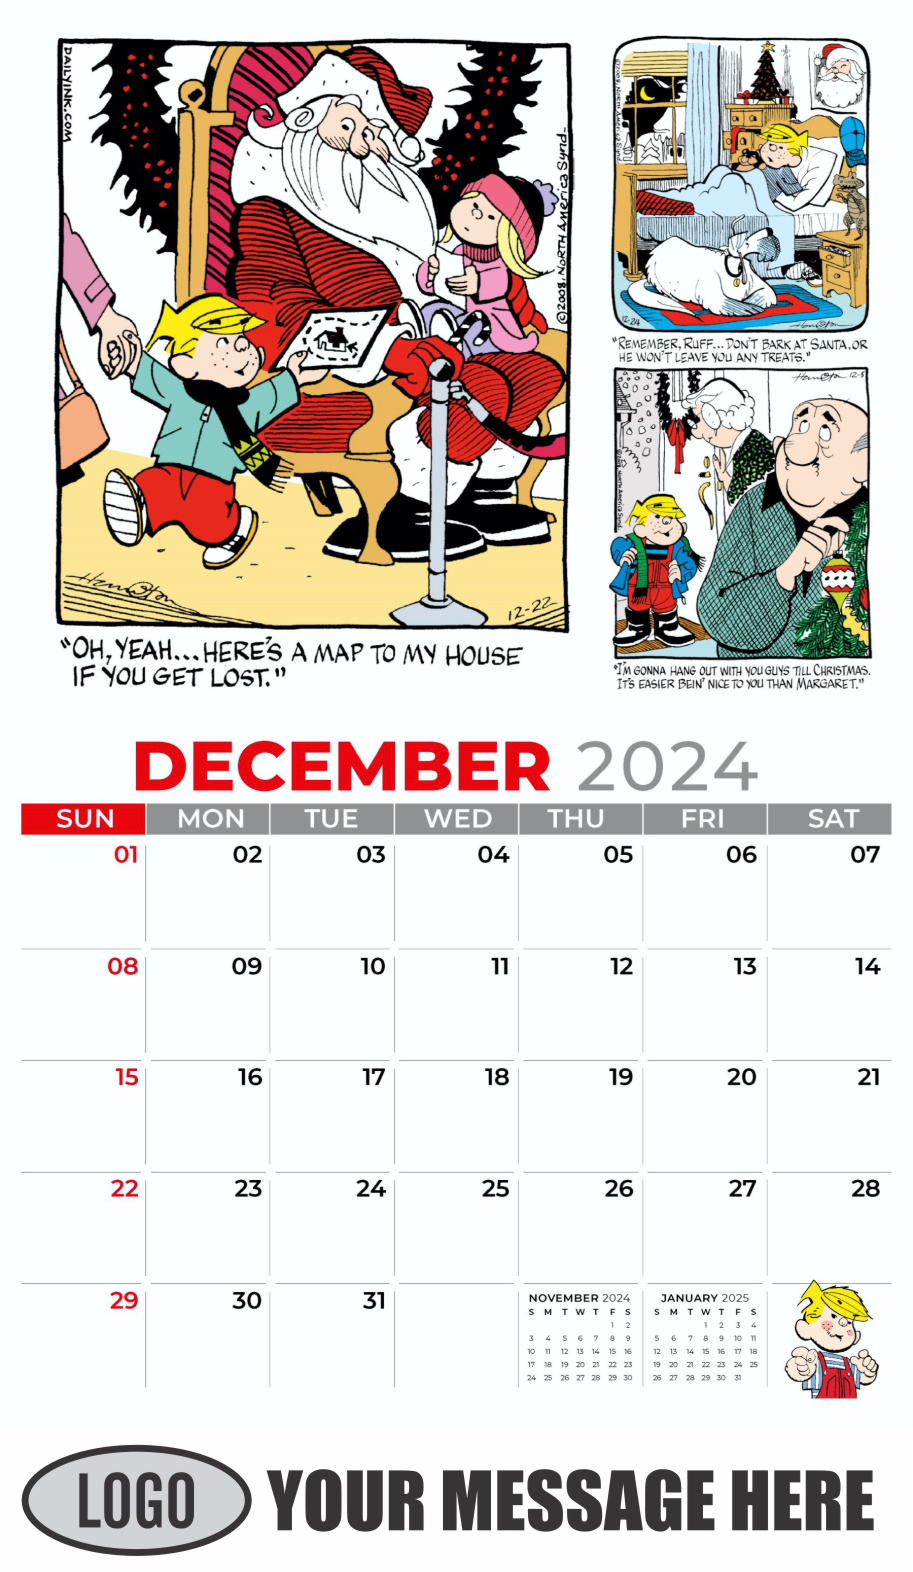 Dennis the Menace 2024 Business Promotional Wall Calendar - December